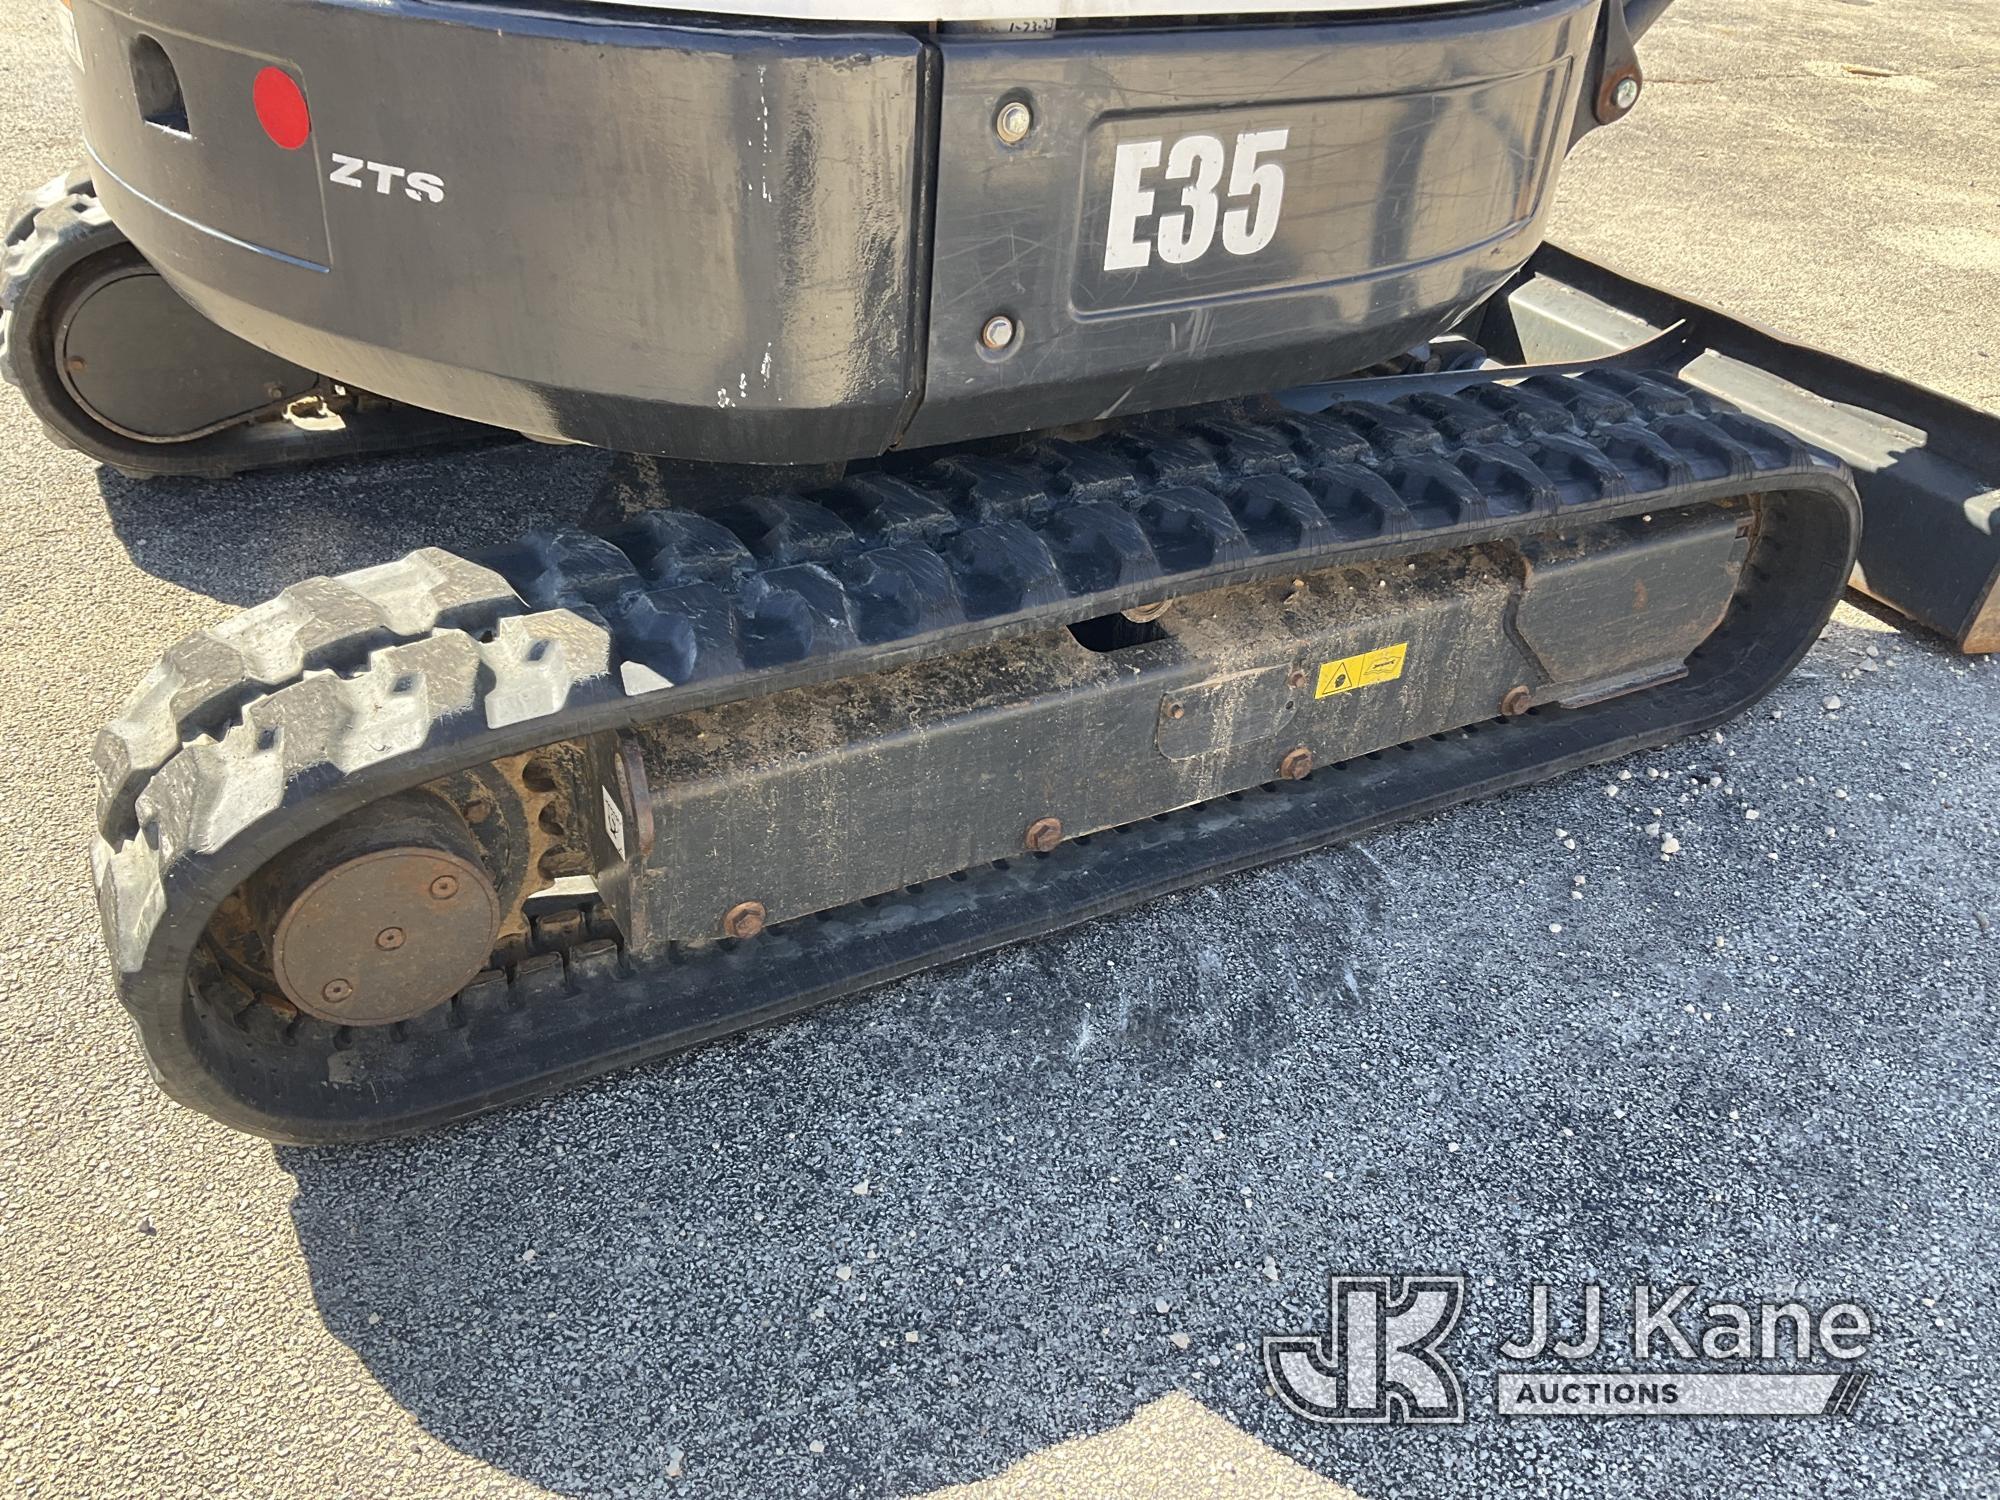 (South Beloit, IL) 2014 Bobcat E35 Mini Hydraulic Excavator Runs, Moves & Operates